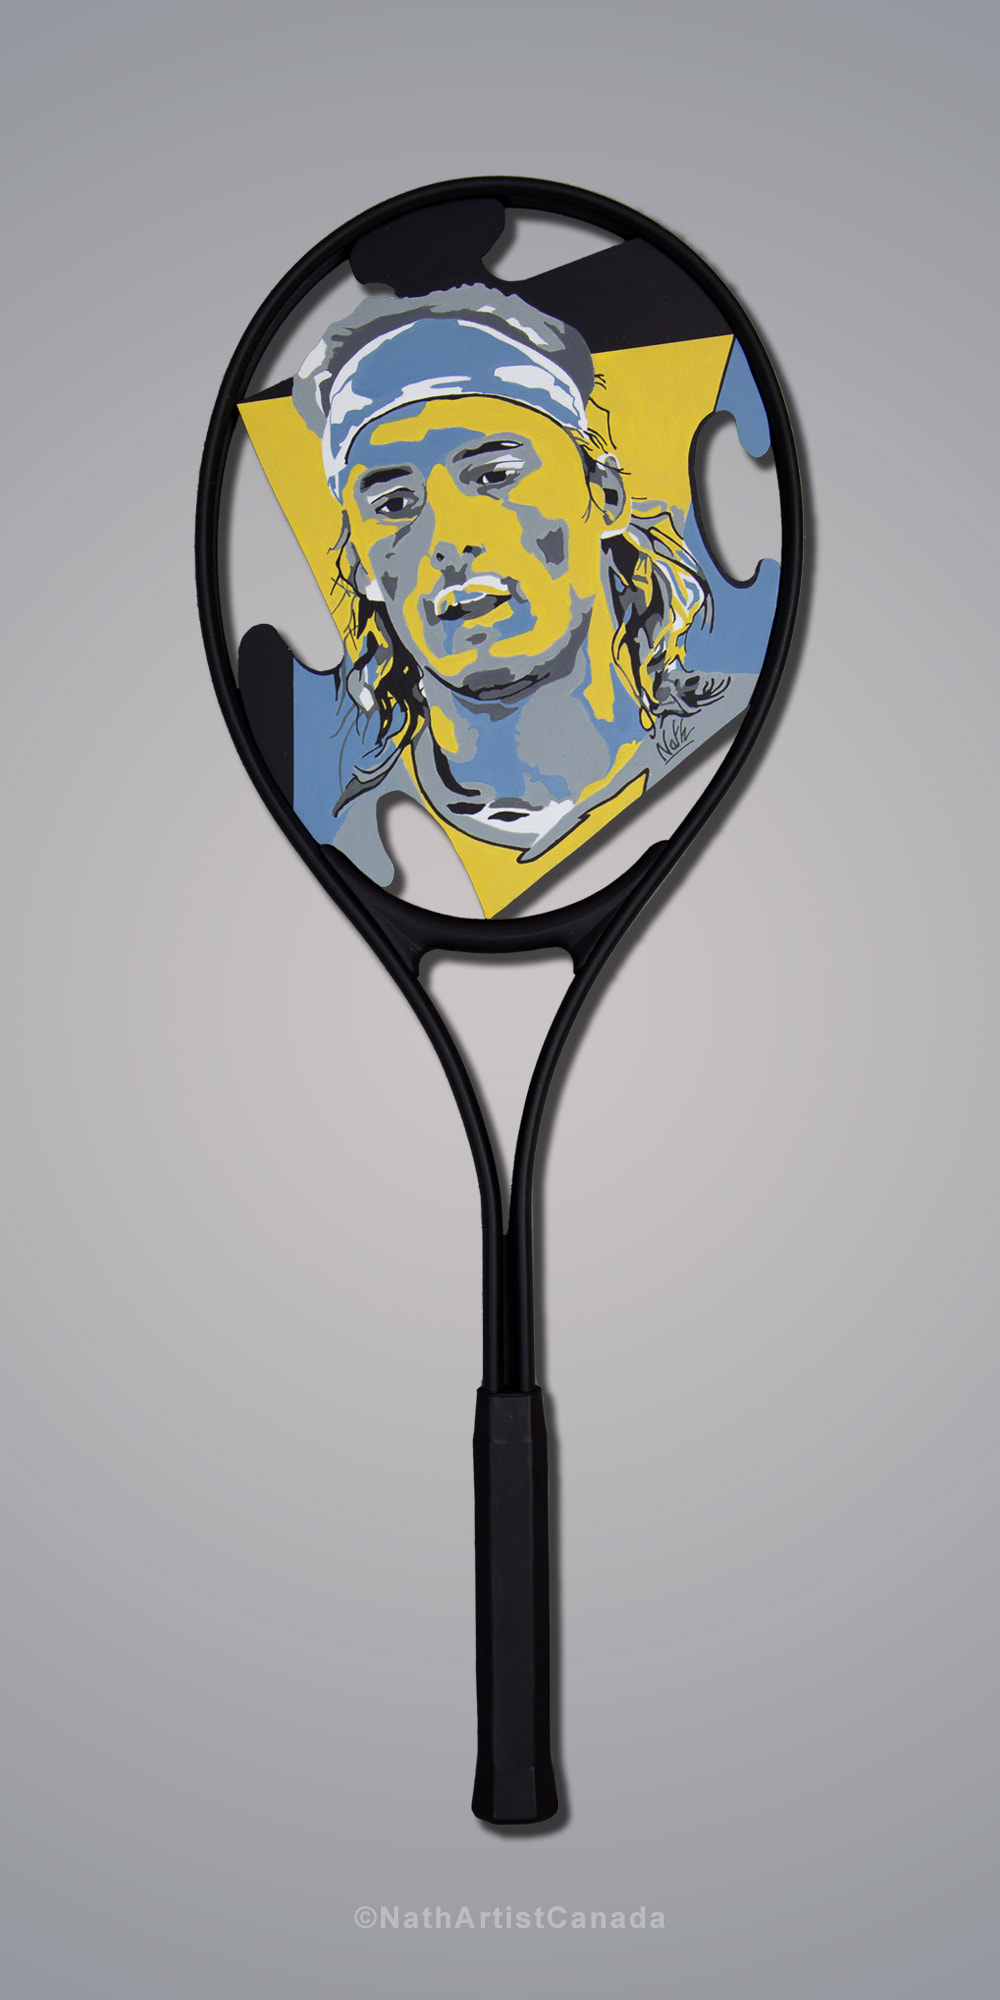 Stephanos Tsitsipas tennis portrait